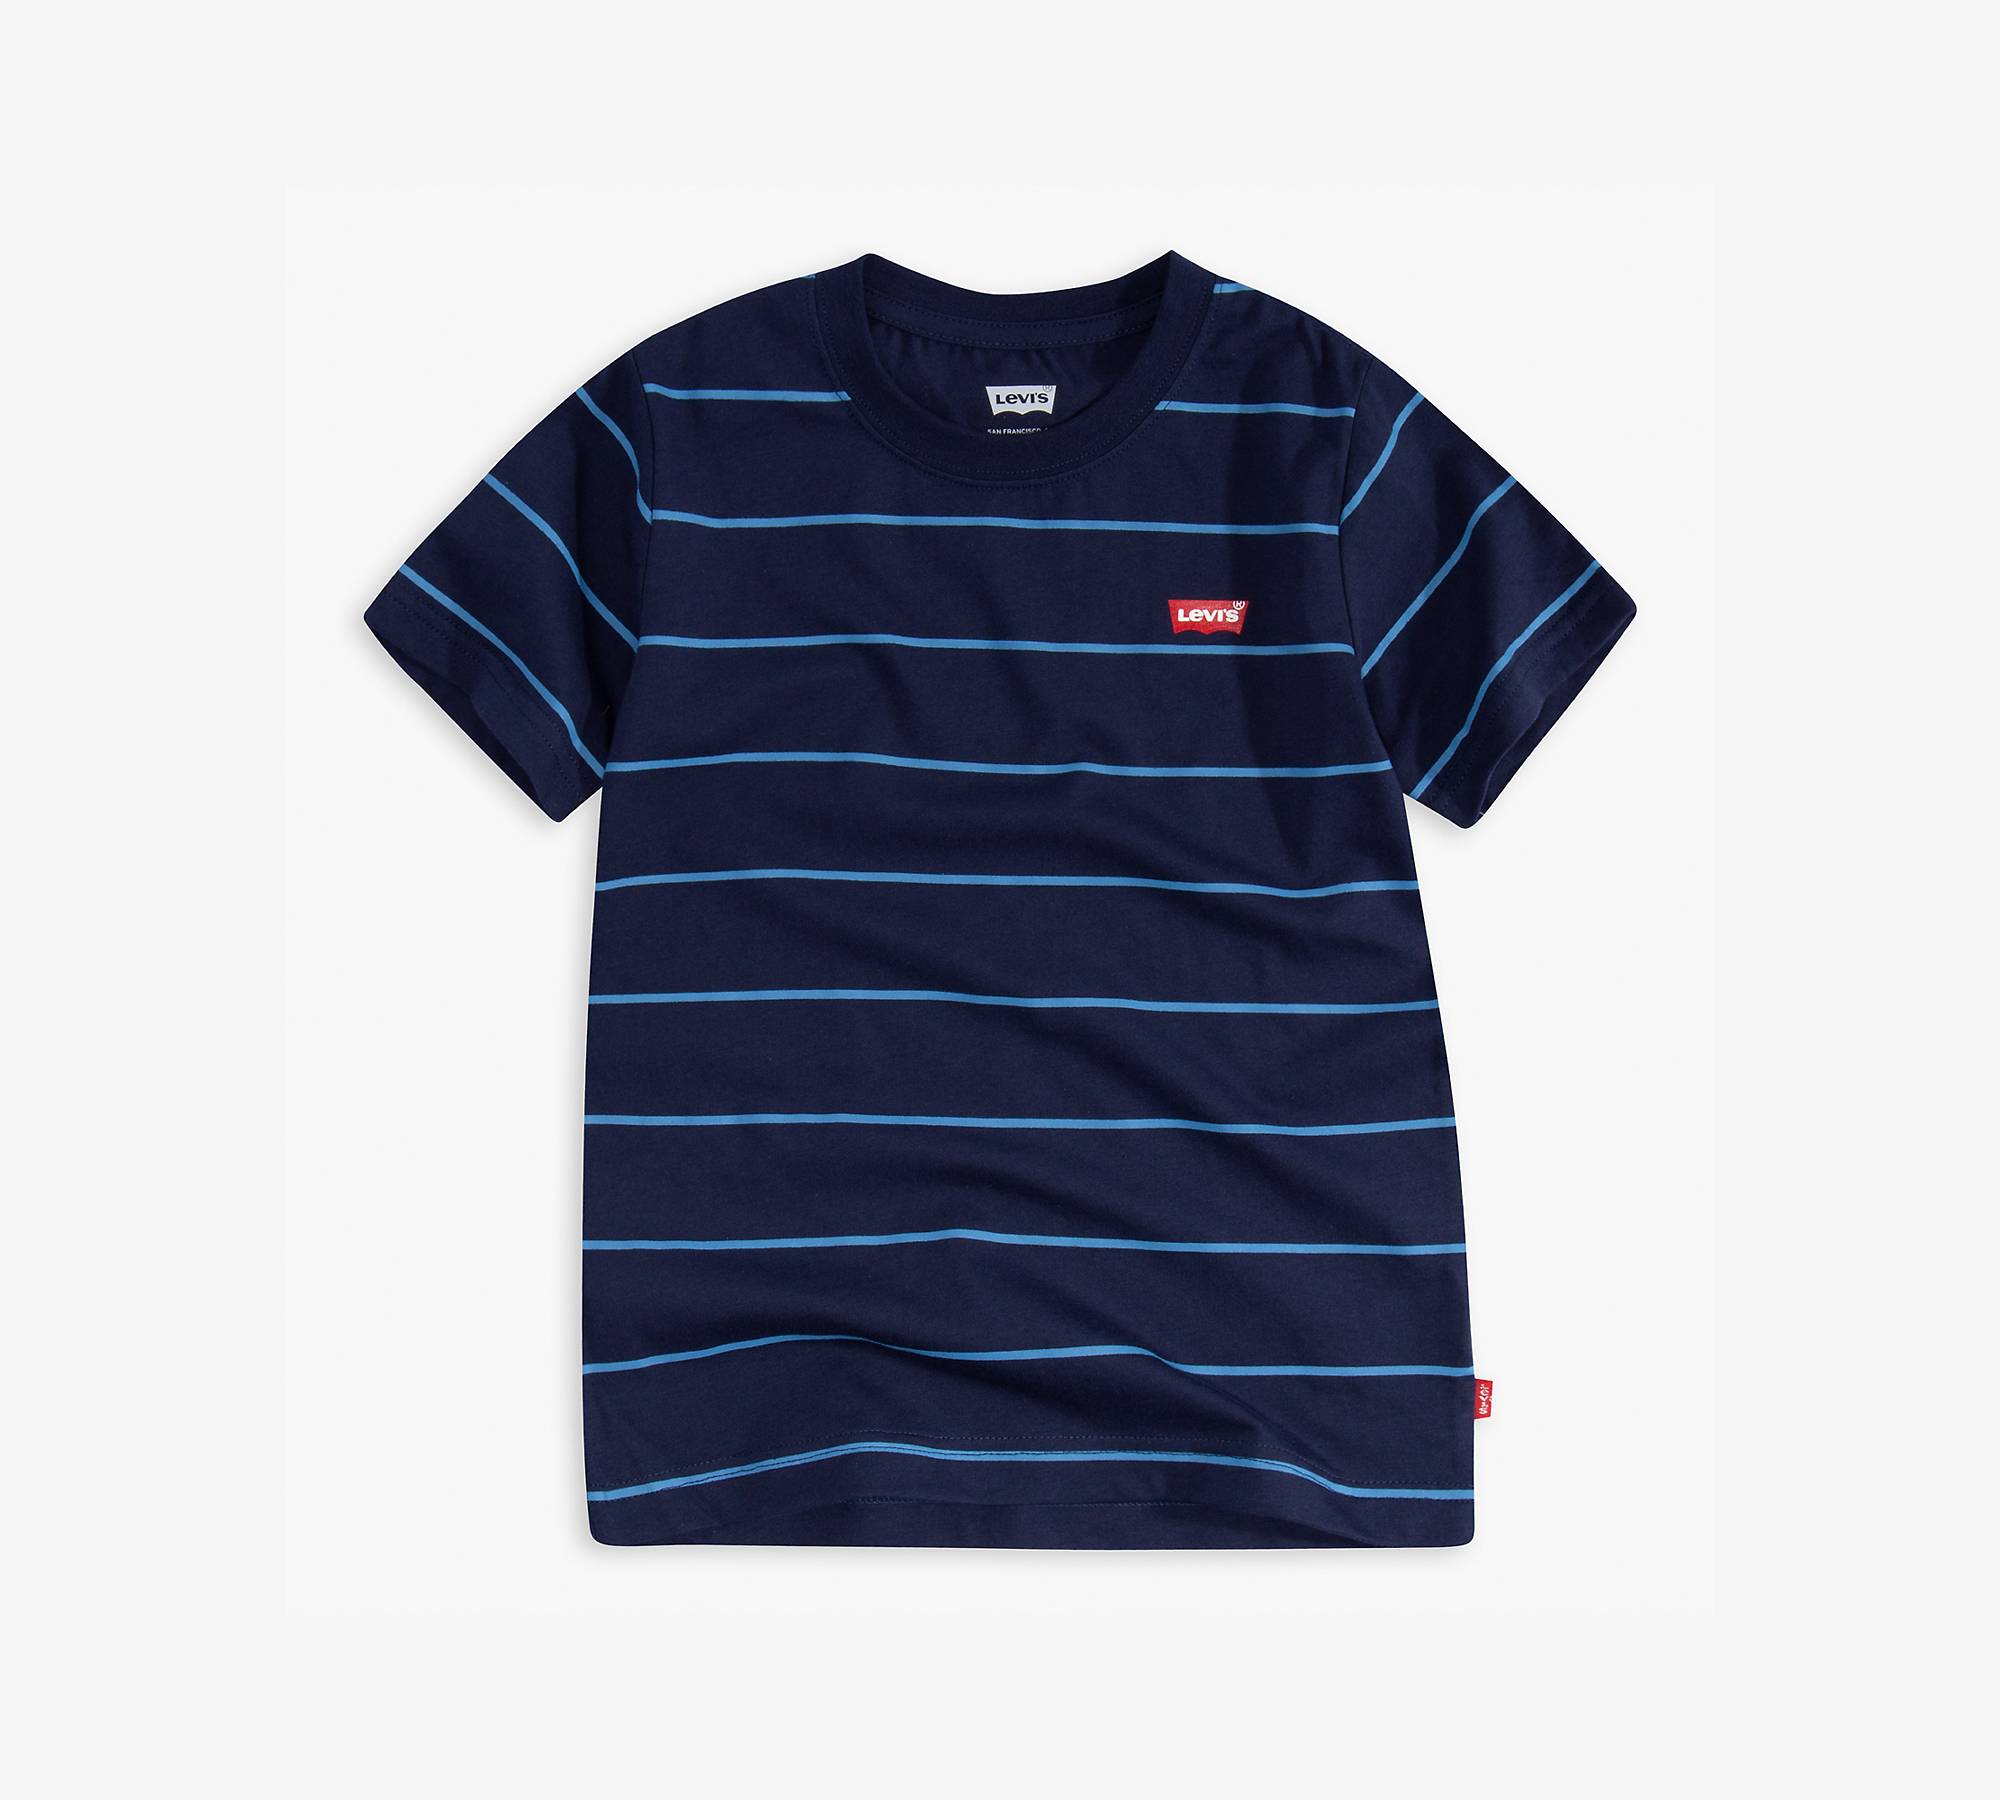 Toddler Boys 2t-4t Striped Indigo Tee Shirt - Blue | Levi's® US